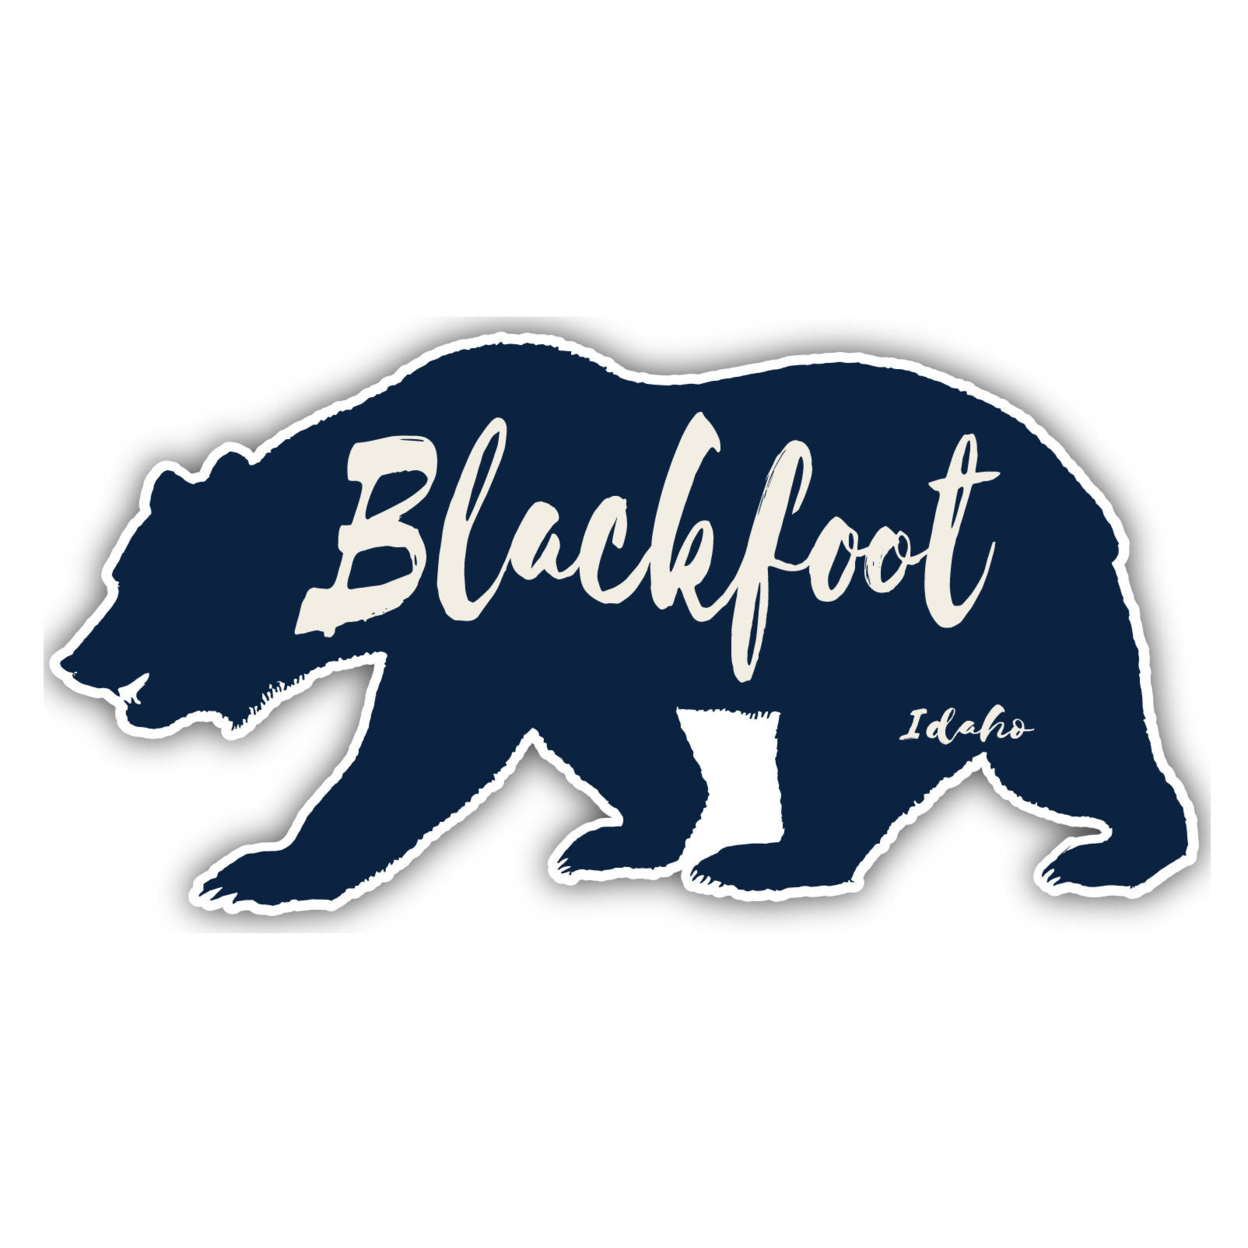 Blackfoot Idaho Souvenir Decorative Stickers (Choose Theme And Size) - Single Unit, 8-Inch, Camp Life